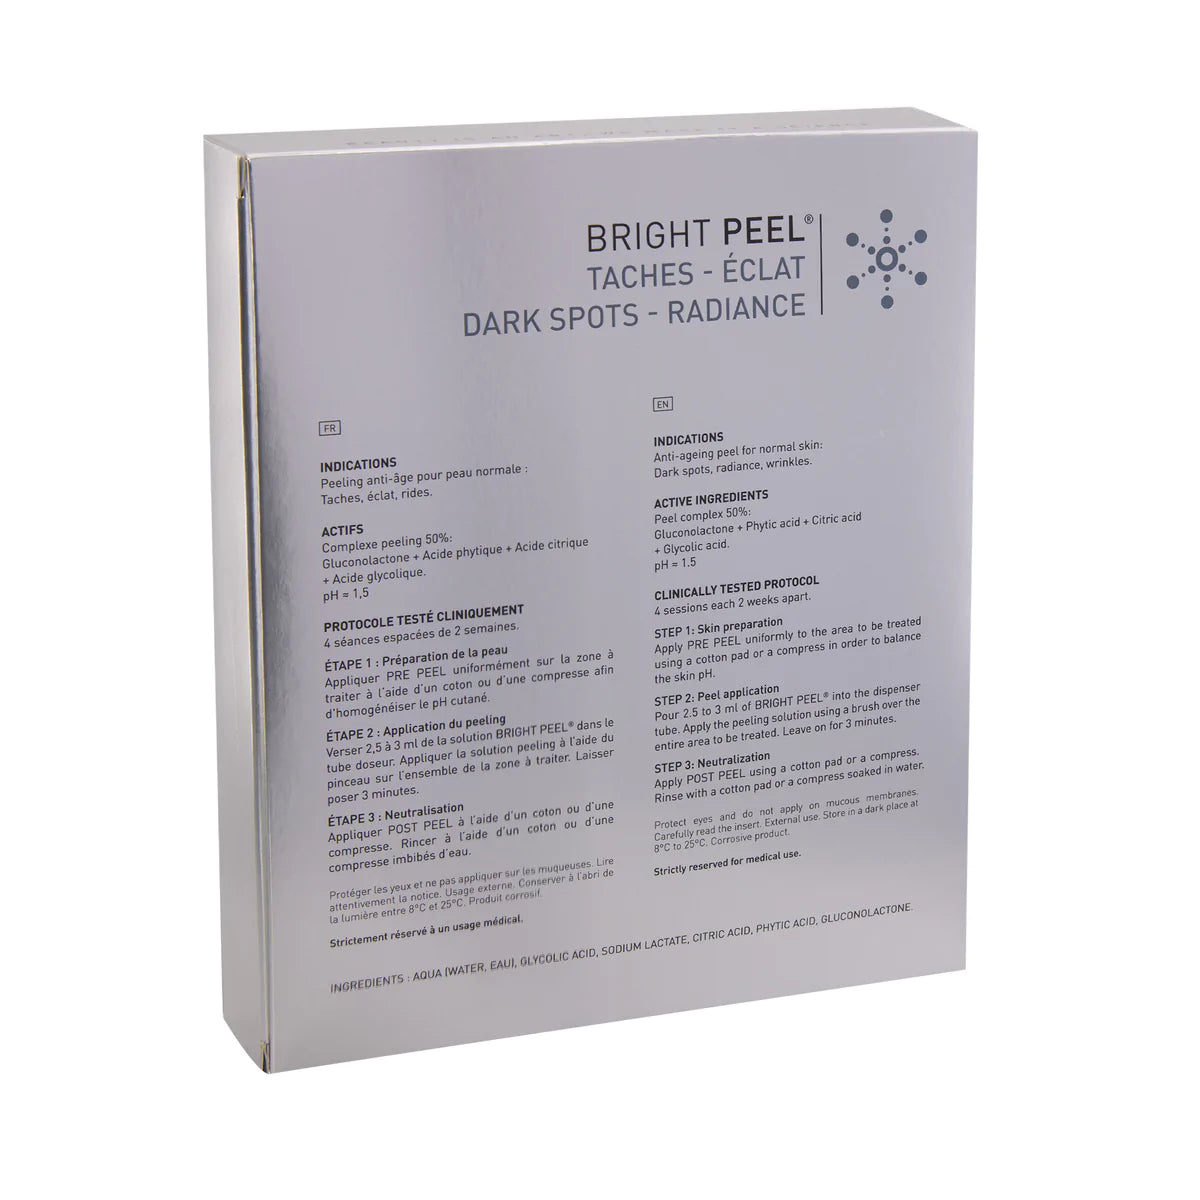 FILLMED Bright Peel (1 x 100ml)